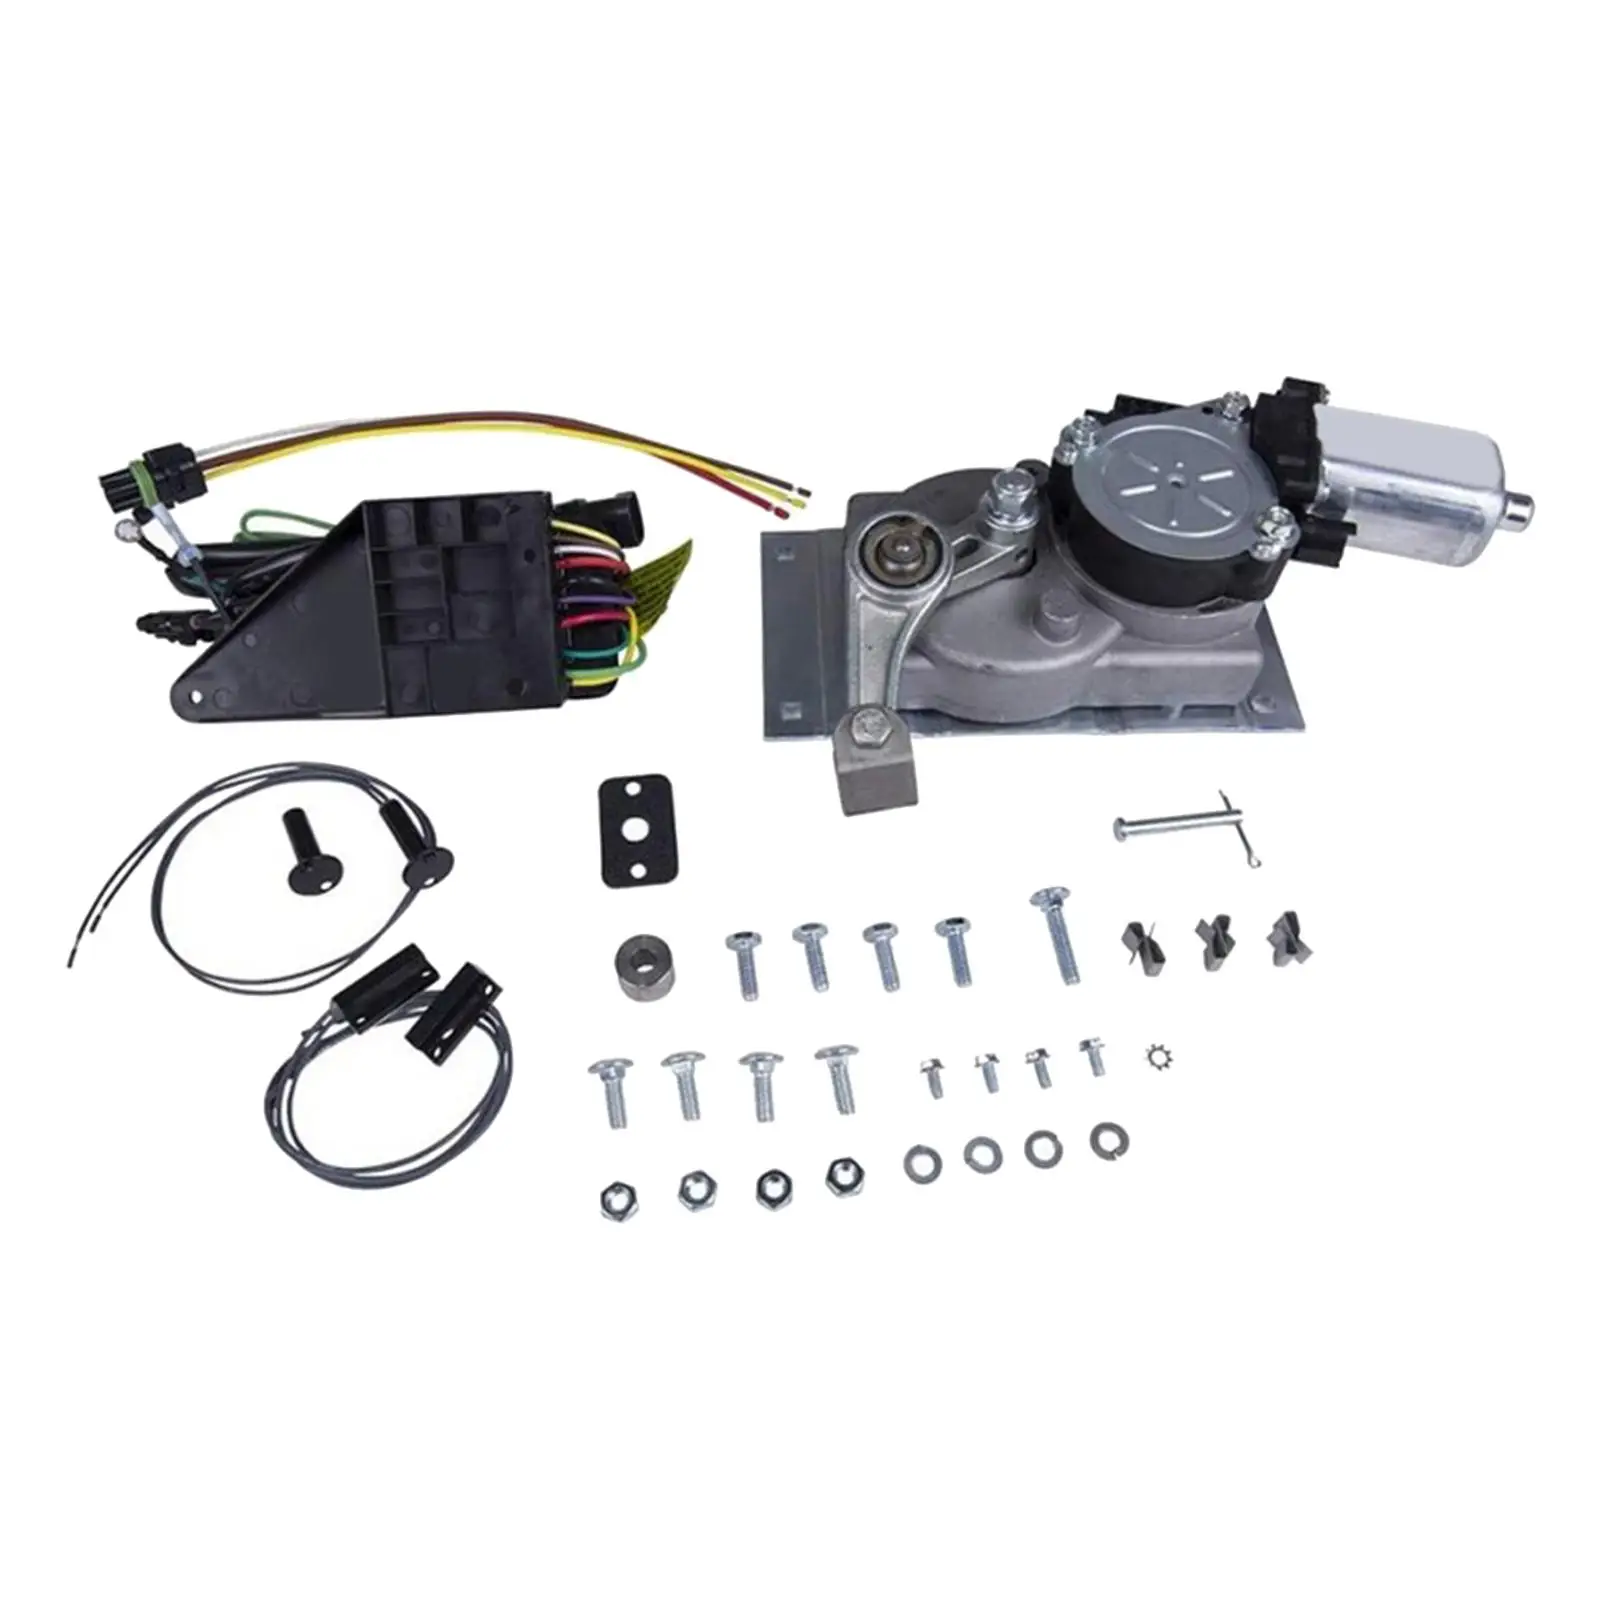 RV Step Motor Replacement Motor Conversion Kit for Motorhomes B Linkage